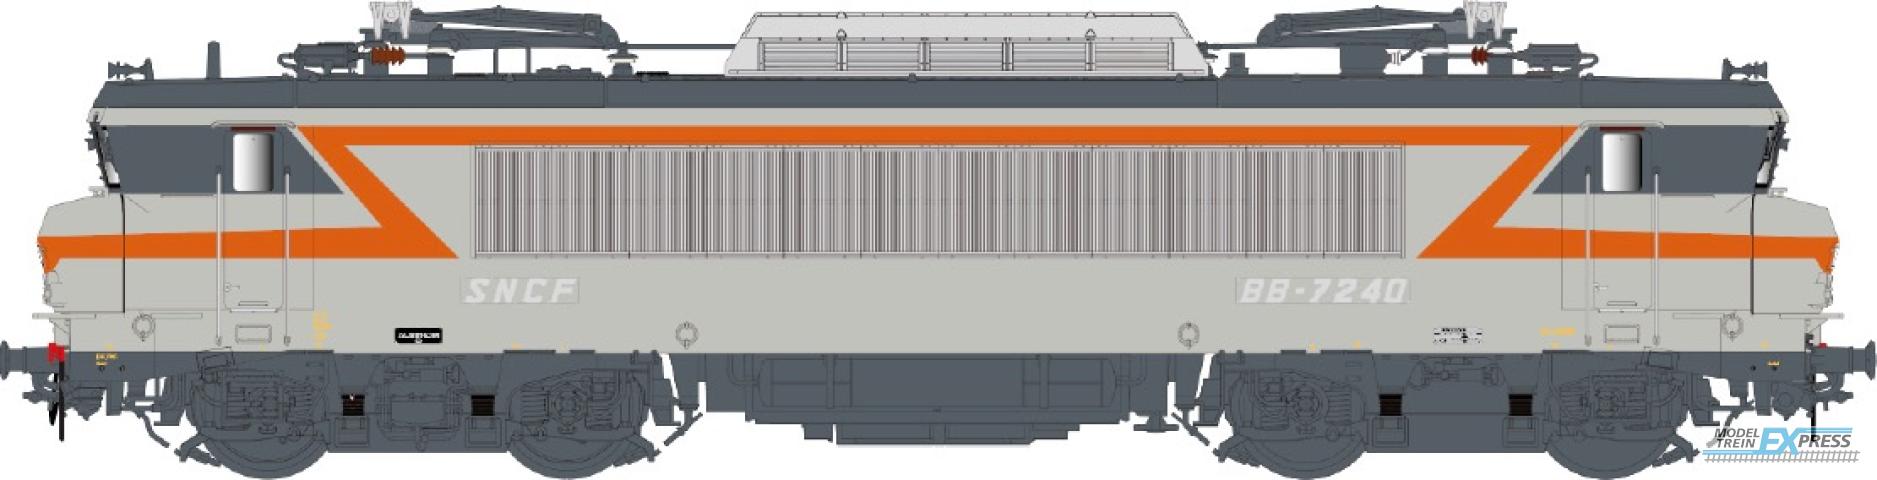 LS Models 11207S BB7240, betongrijs/oranje, nummerplaten / Ep. IV / SNCF / HO / DC SOUND / 1 P.